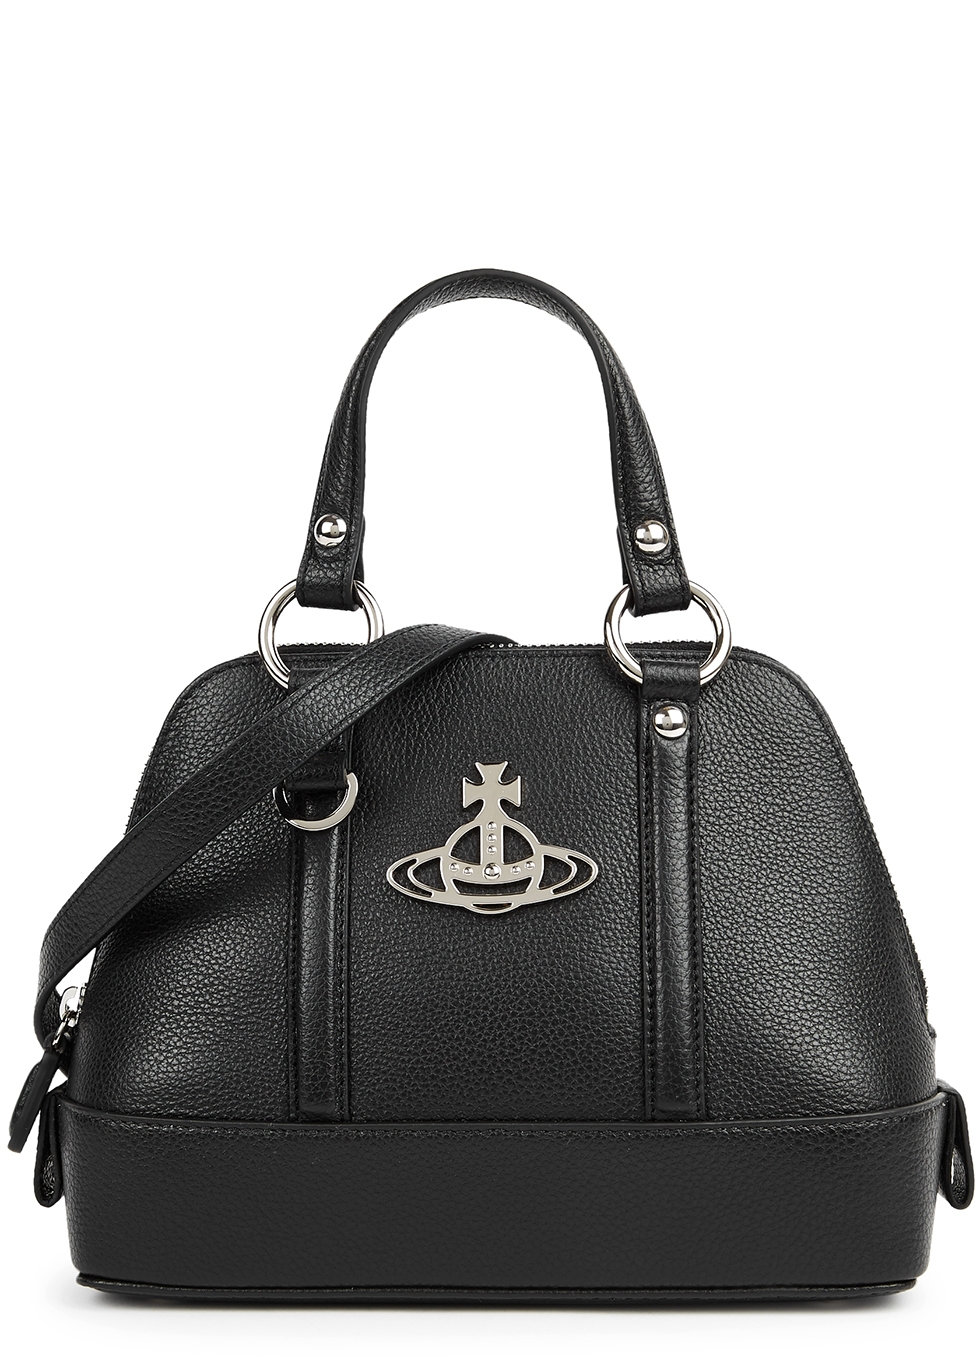 Jordan small black leather top handle bag | SportSpyder